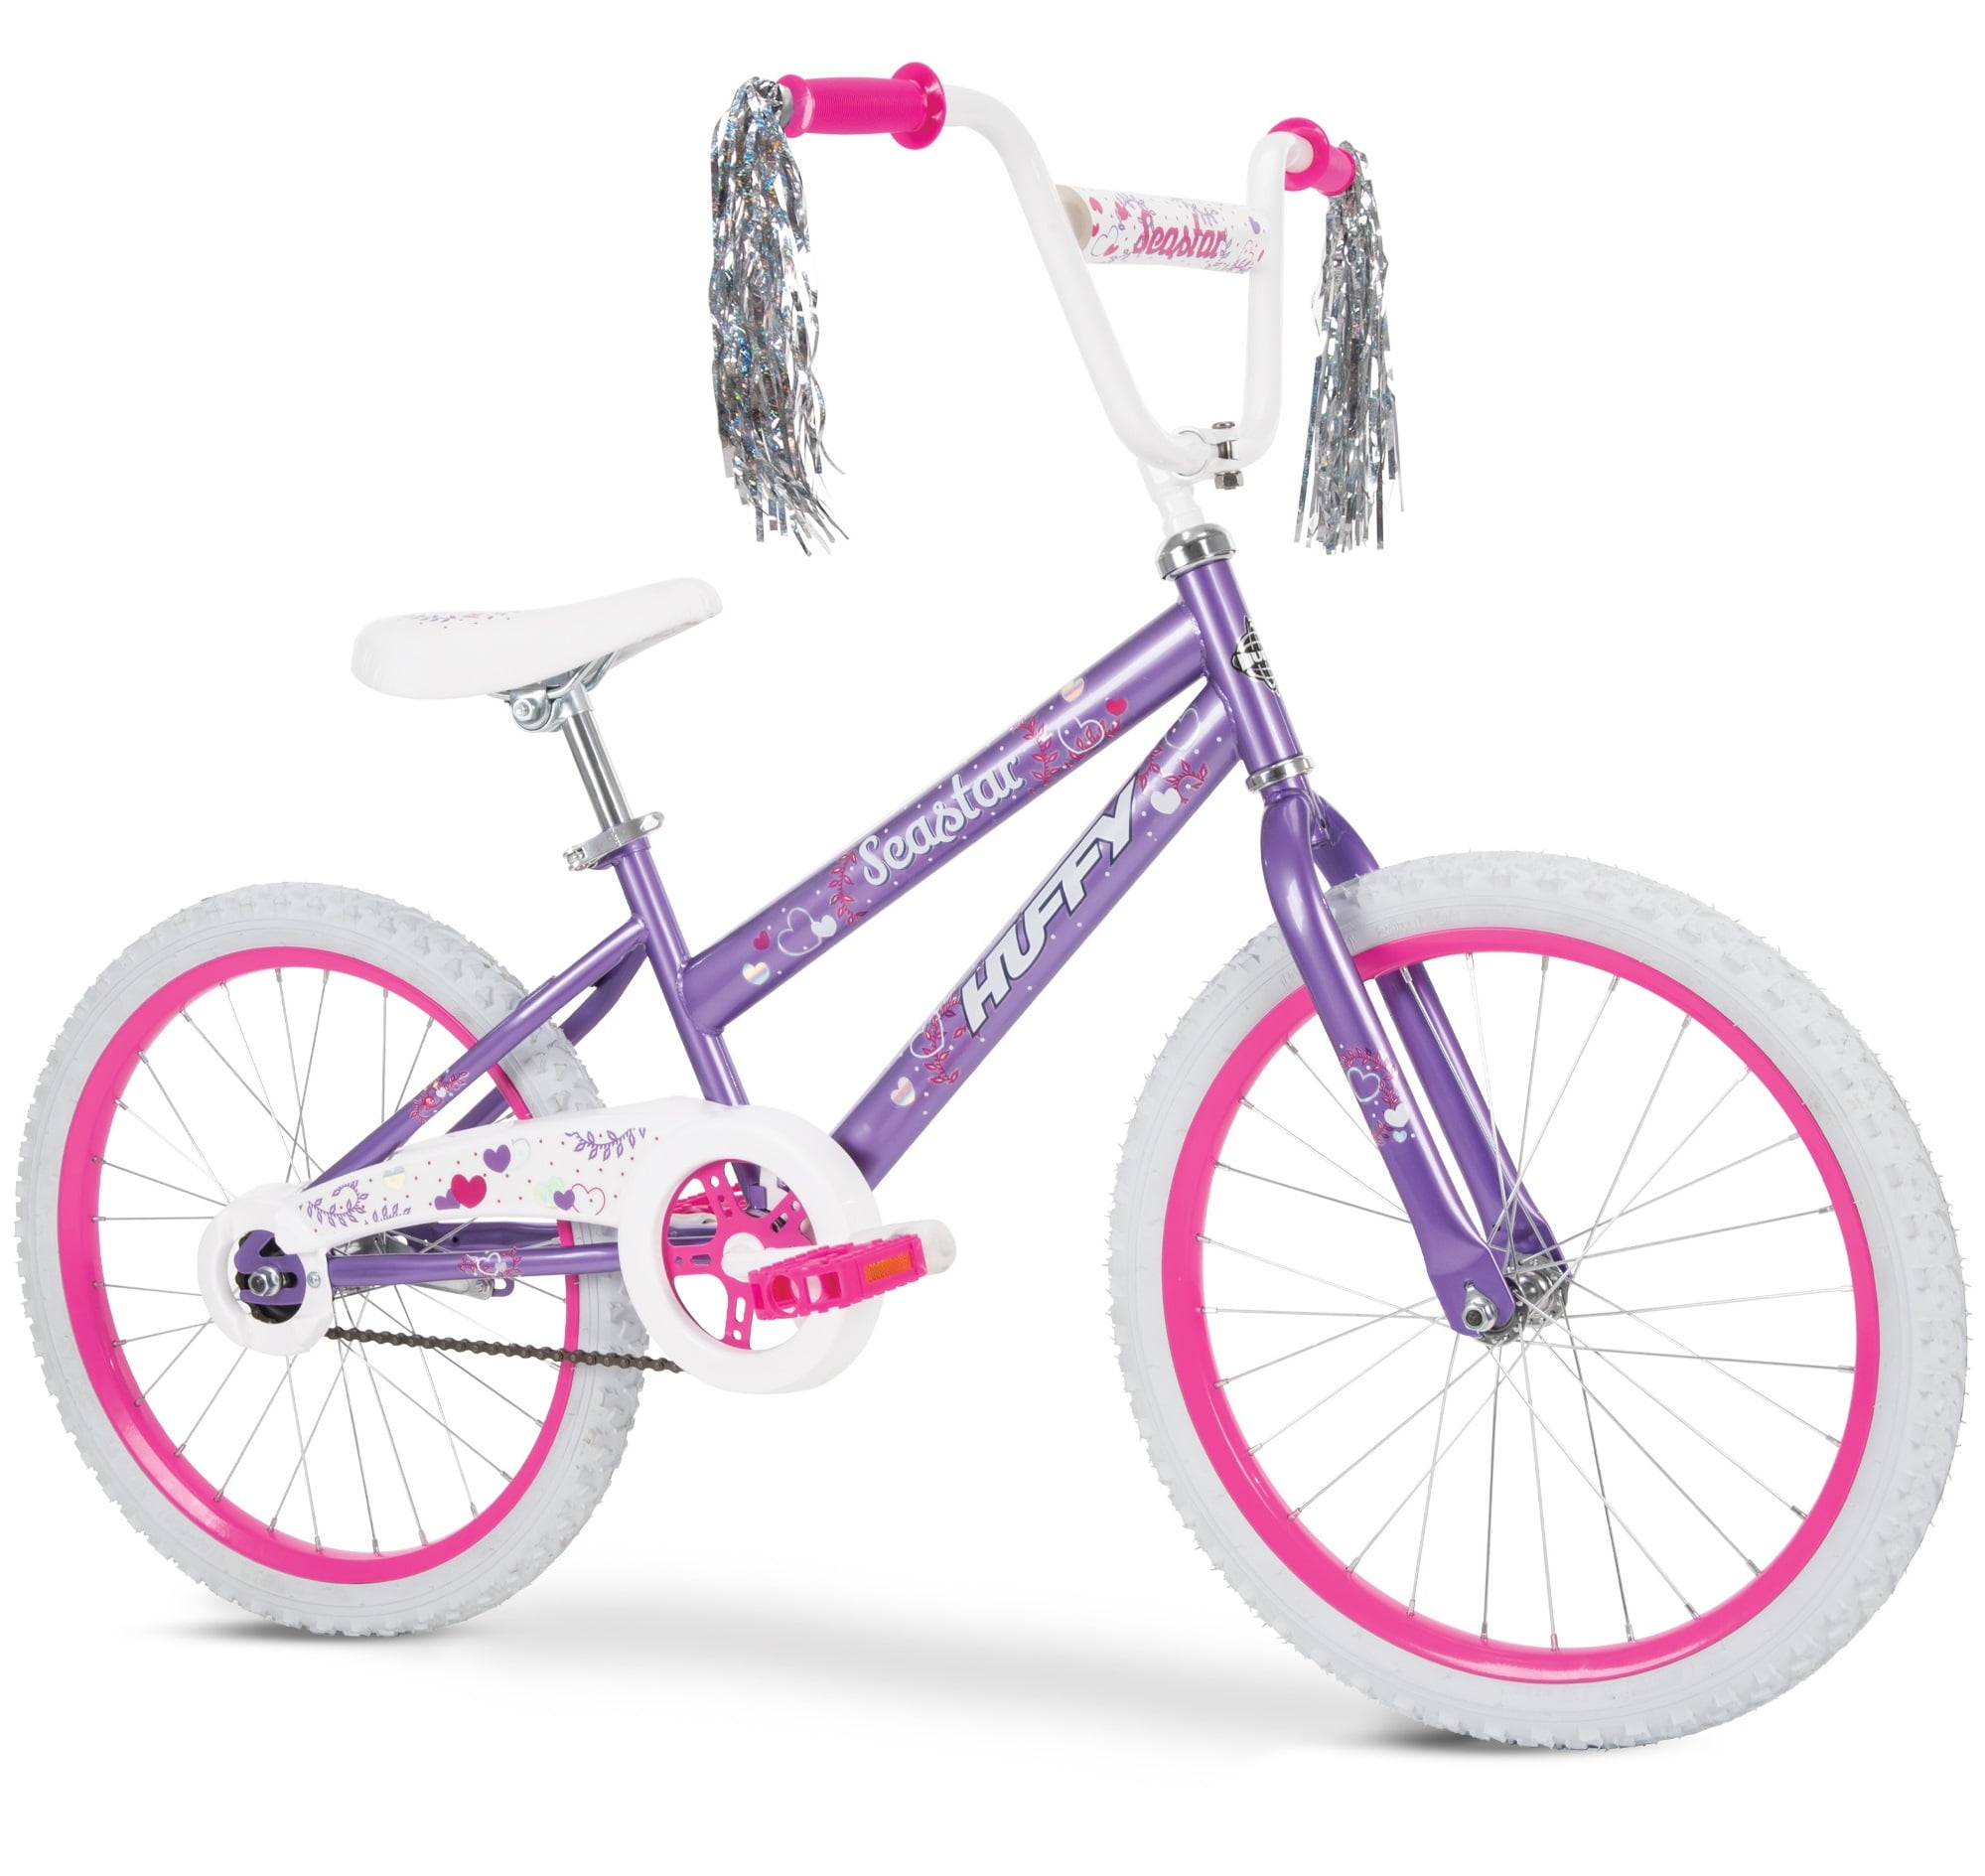 Huffy Girls' Sea Star Bike Outdoor Biking Cycling Bicycle Riding Toy 20" Pink 